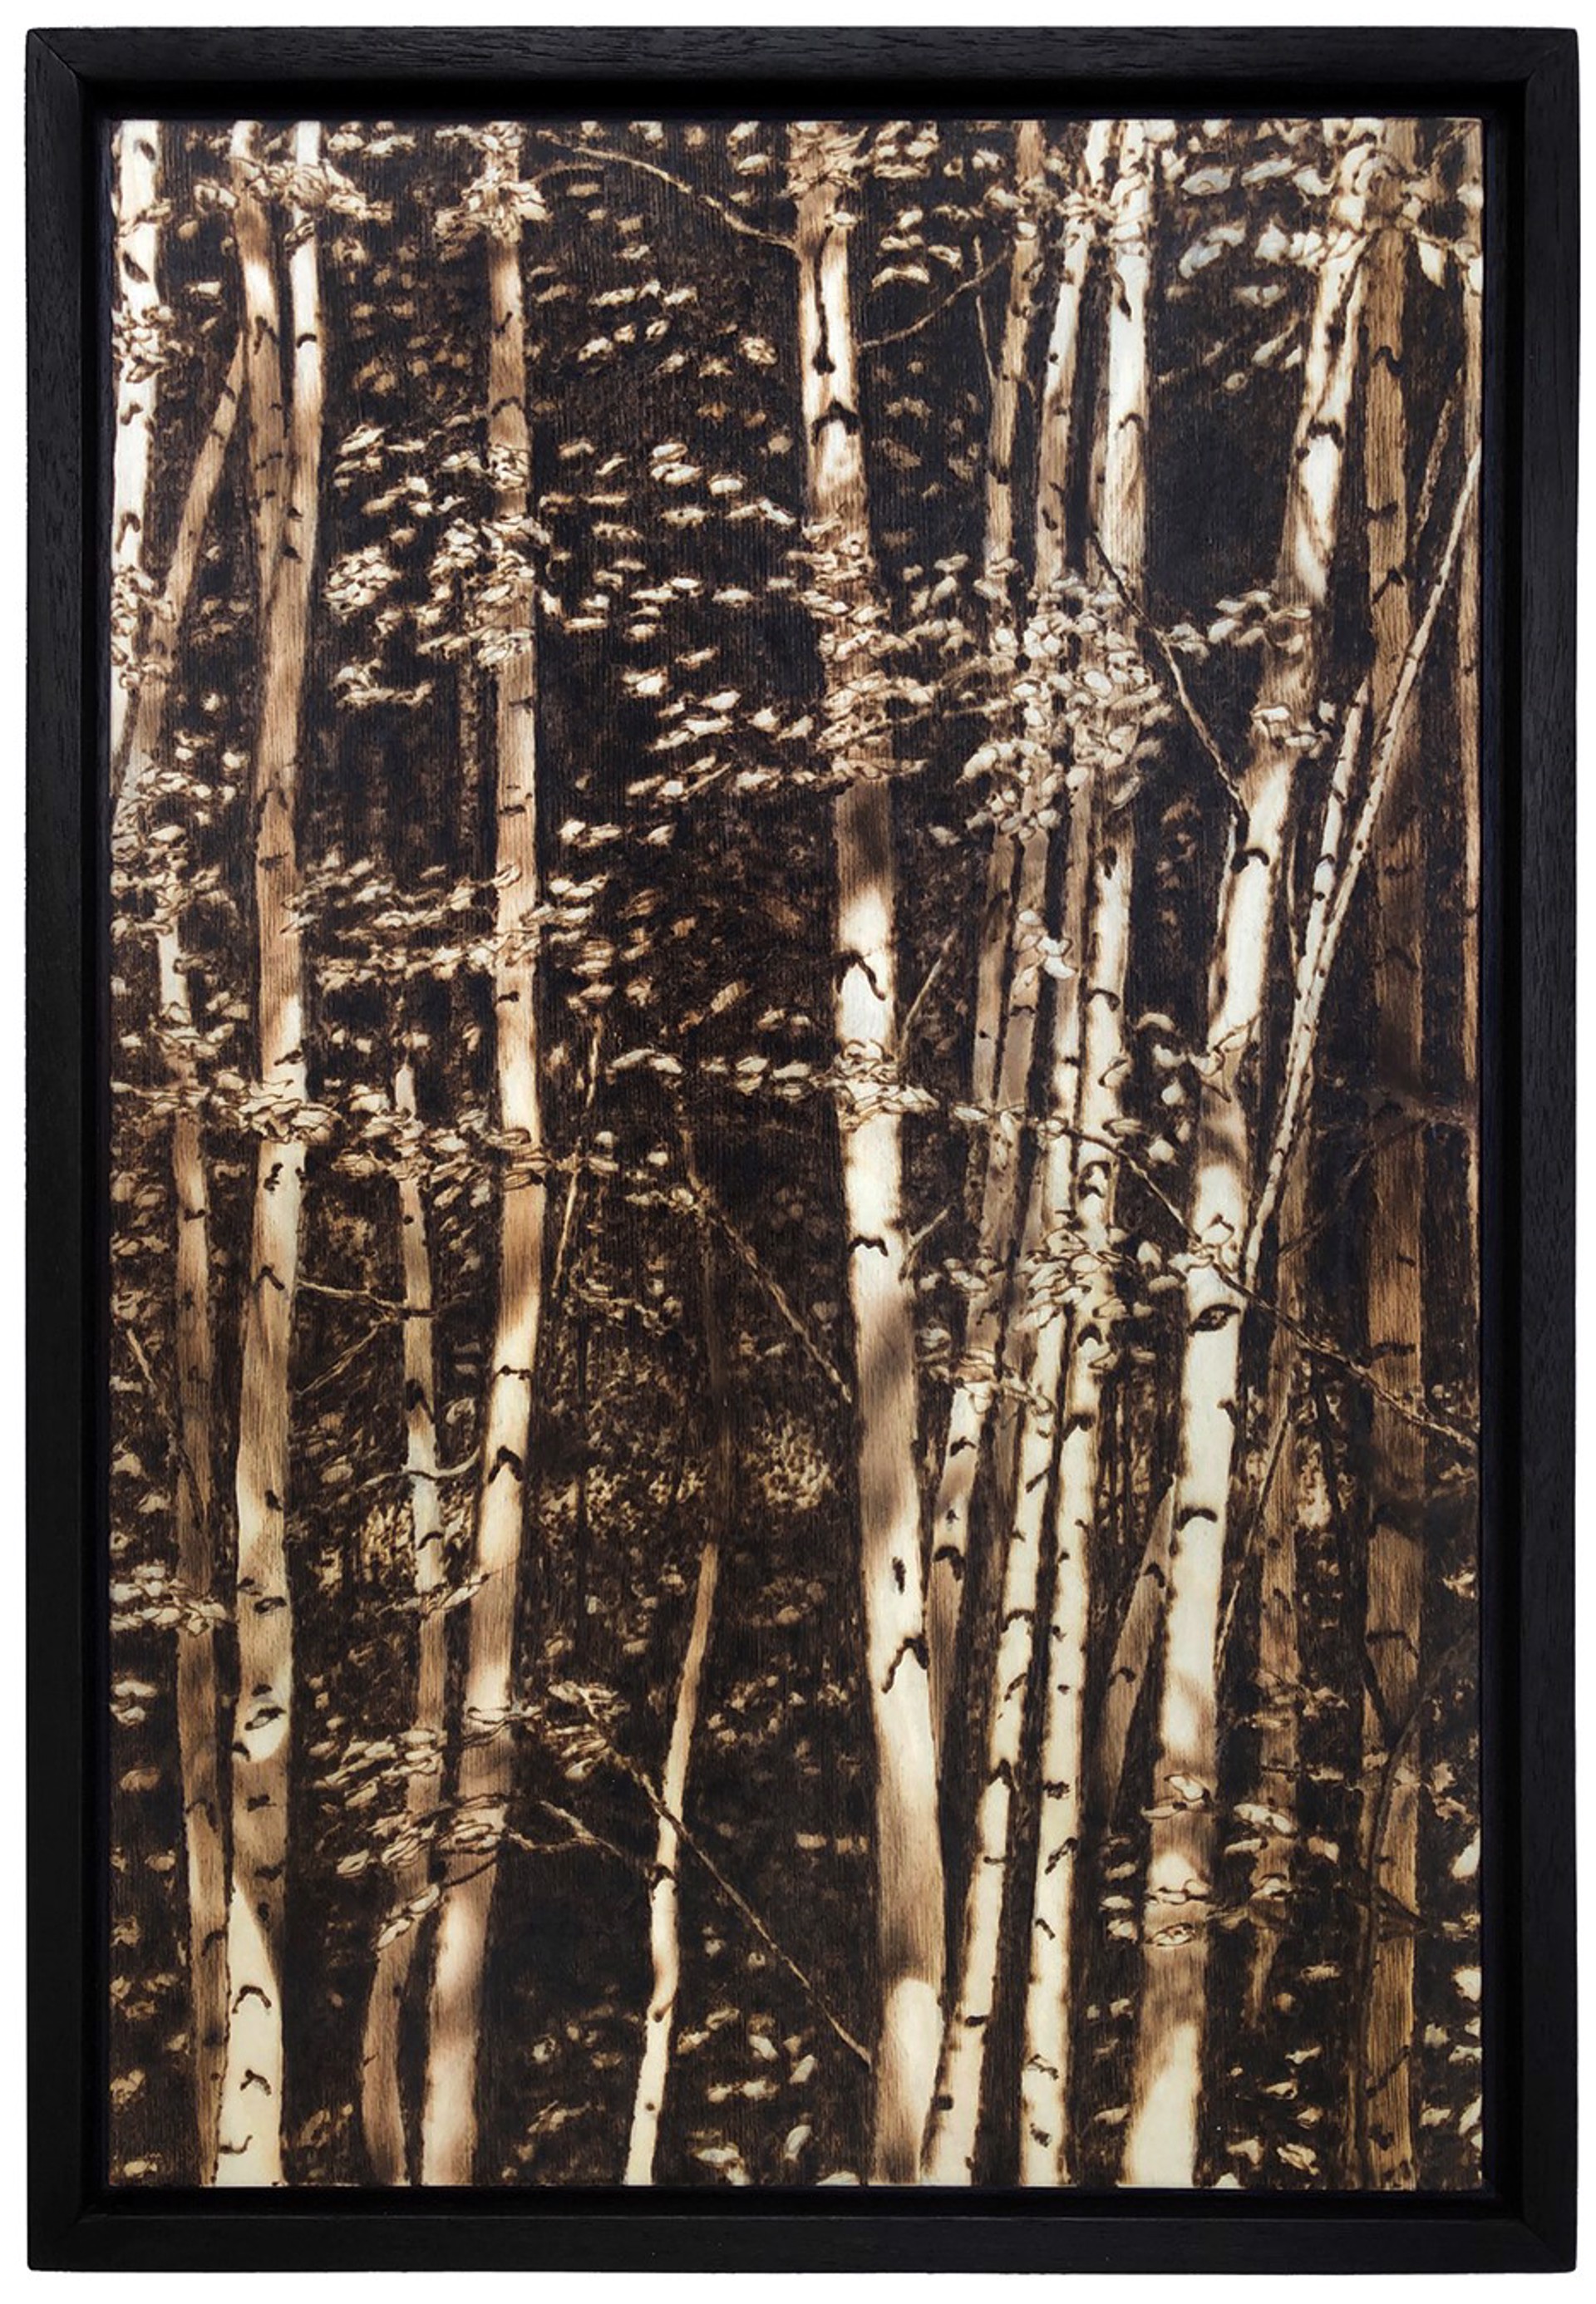 Light in the Birches by Paul Chojnowski